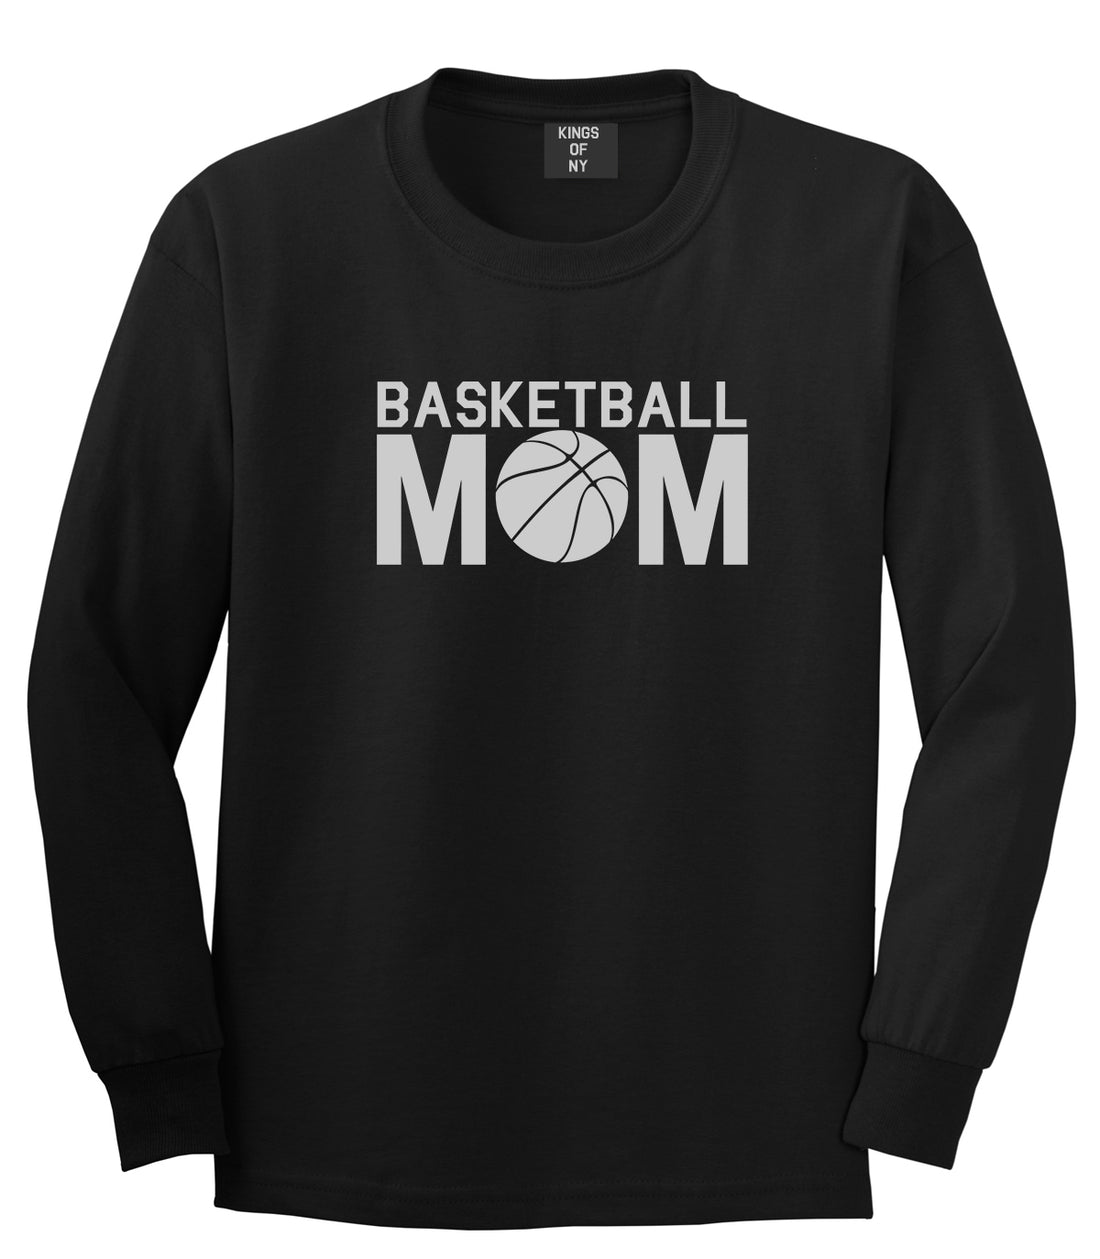 Basketball Mom Black Long Sleeve T-Shirt by Kings Of NY